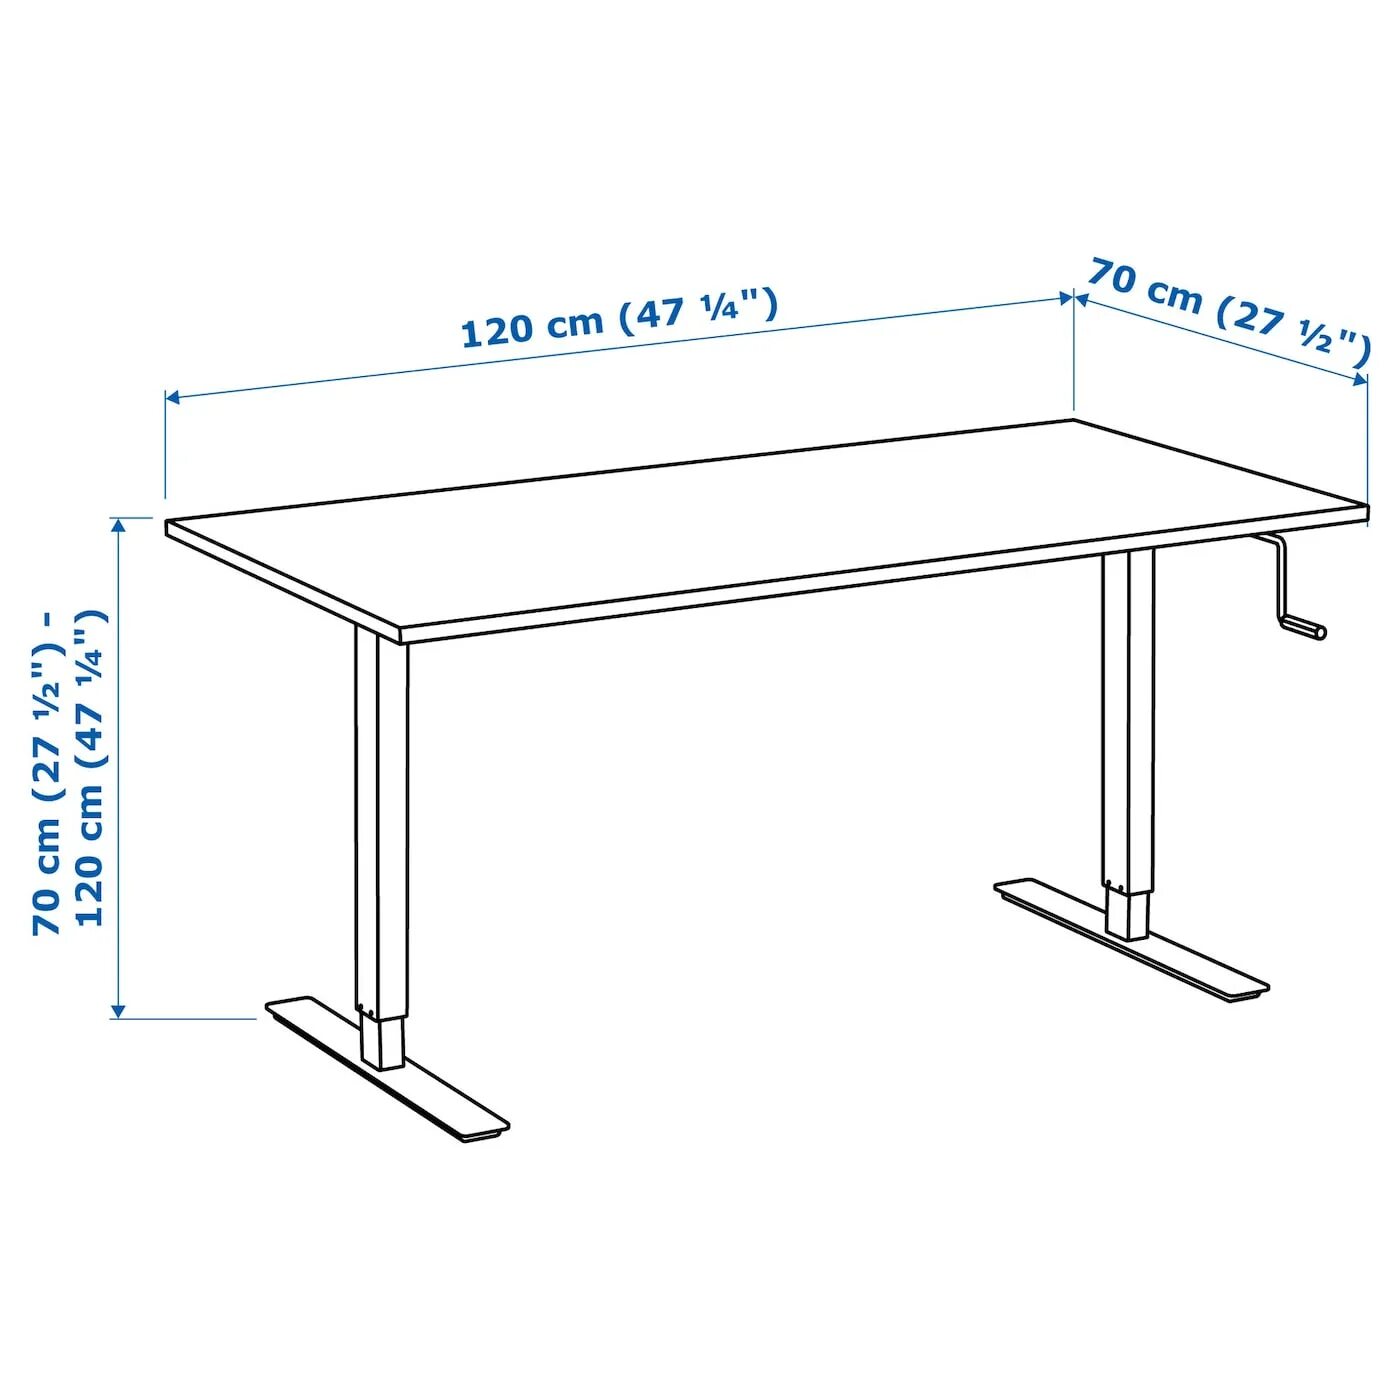 Ikea skarsta 160x80. Ikea skarsta стол. Стол икеа регулируемый по высоте. Регулируемый стол икеа СКАРСТА. Стол высотой 90 см